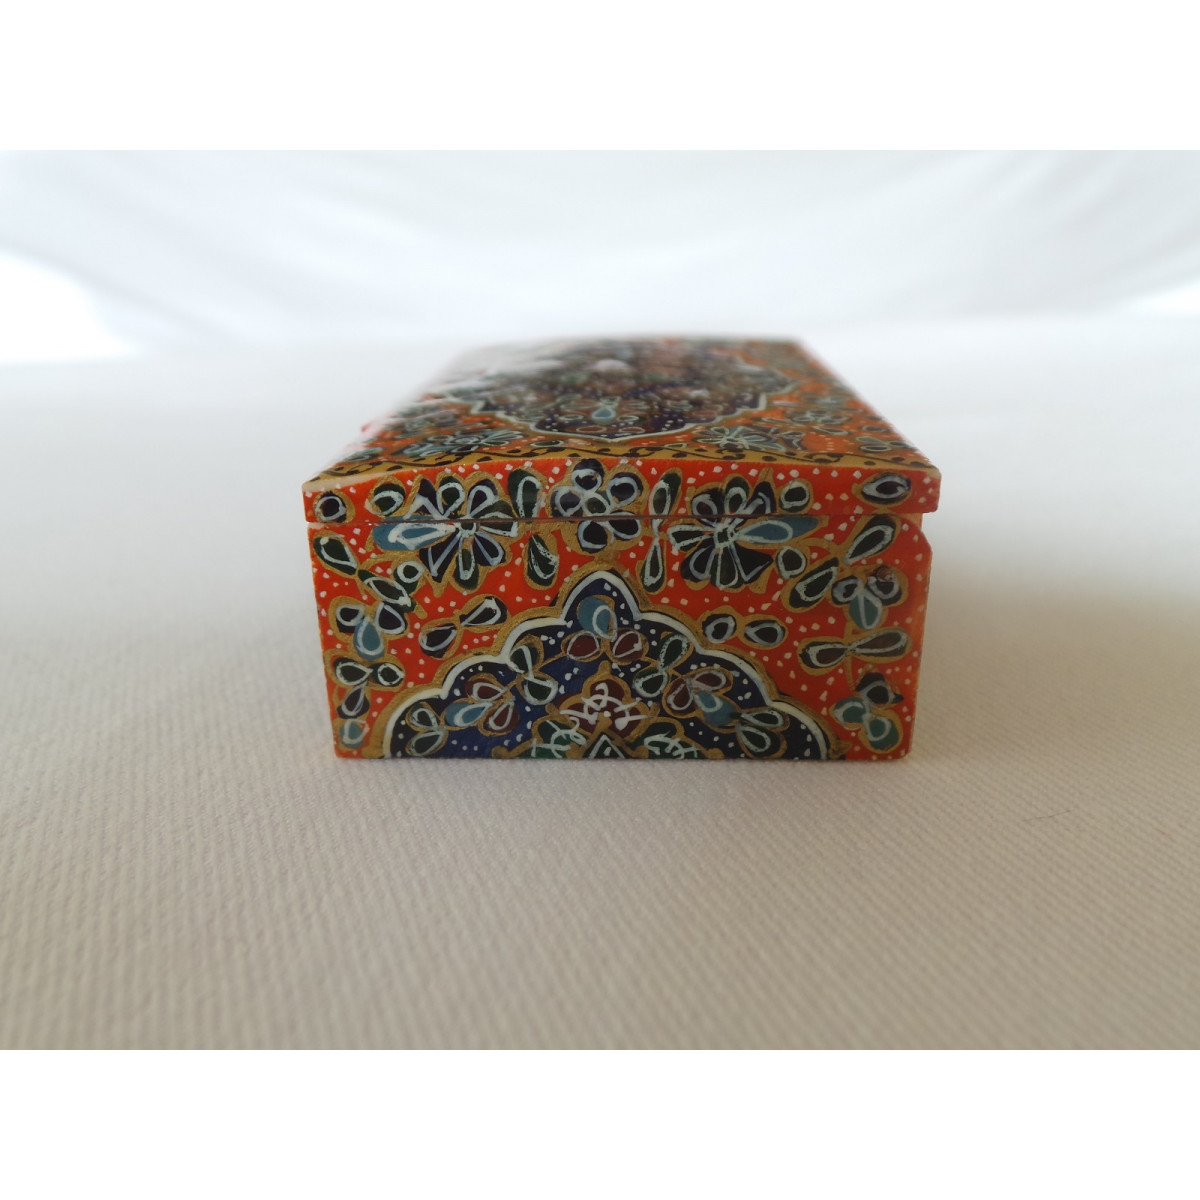 Miniature Hand Painted Jewelry Box - HM1007-Persian Handicrafts